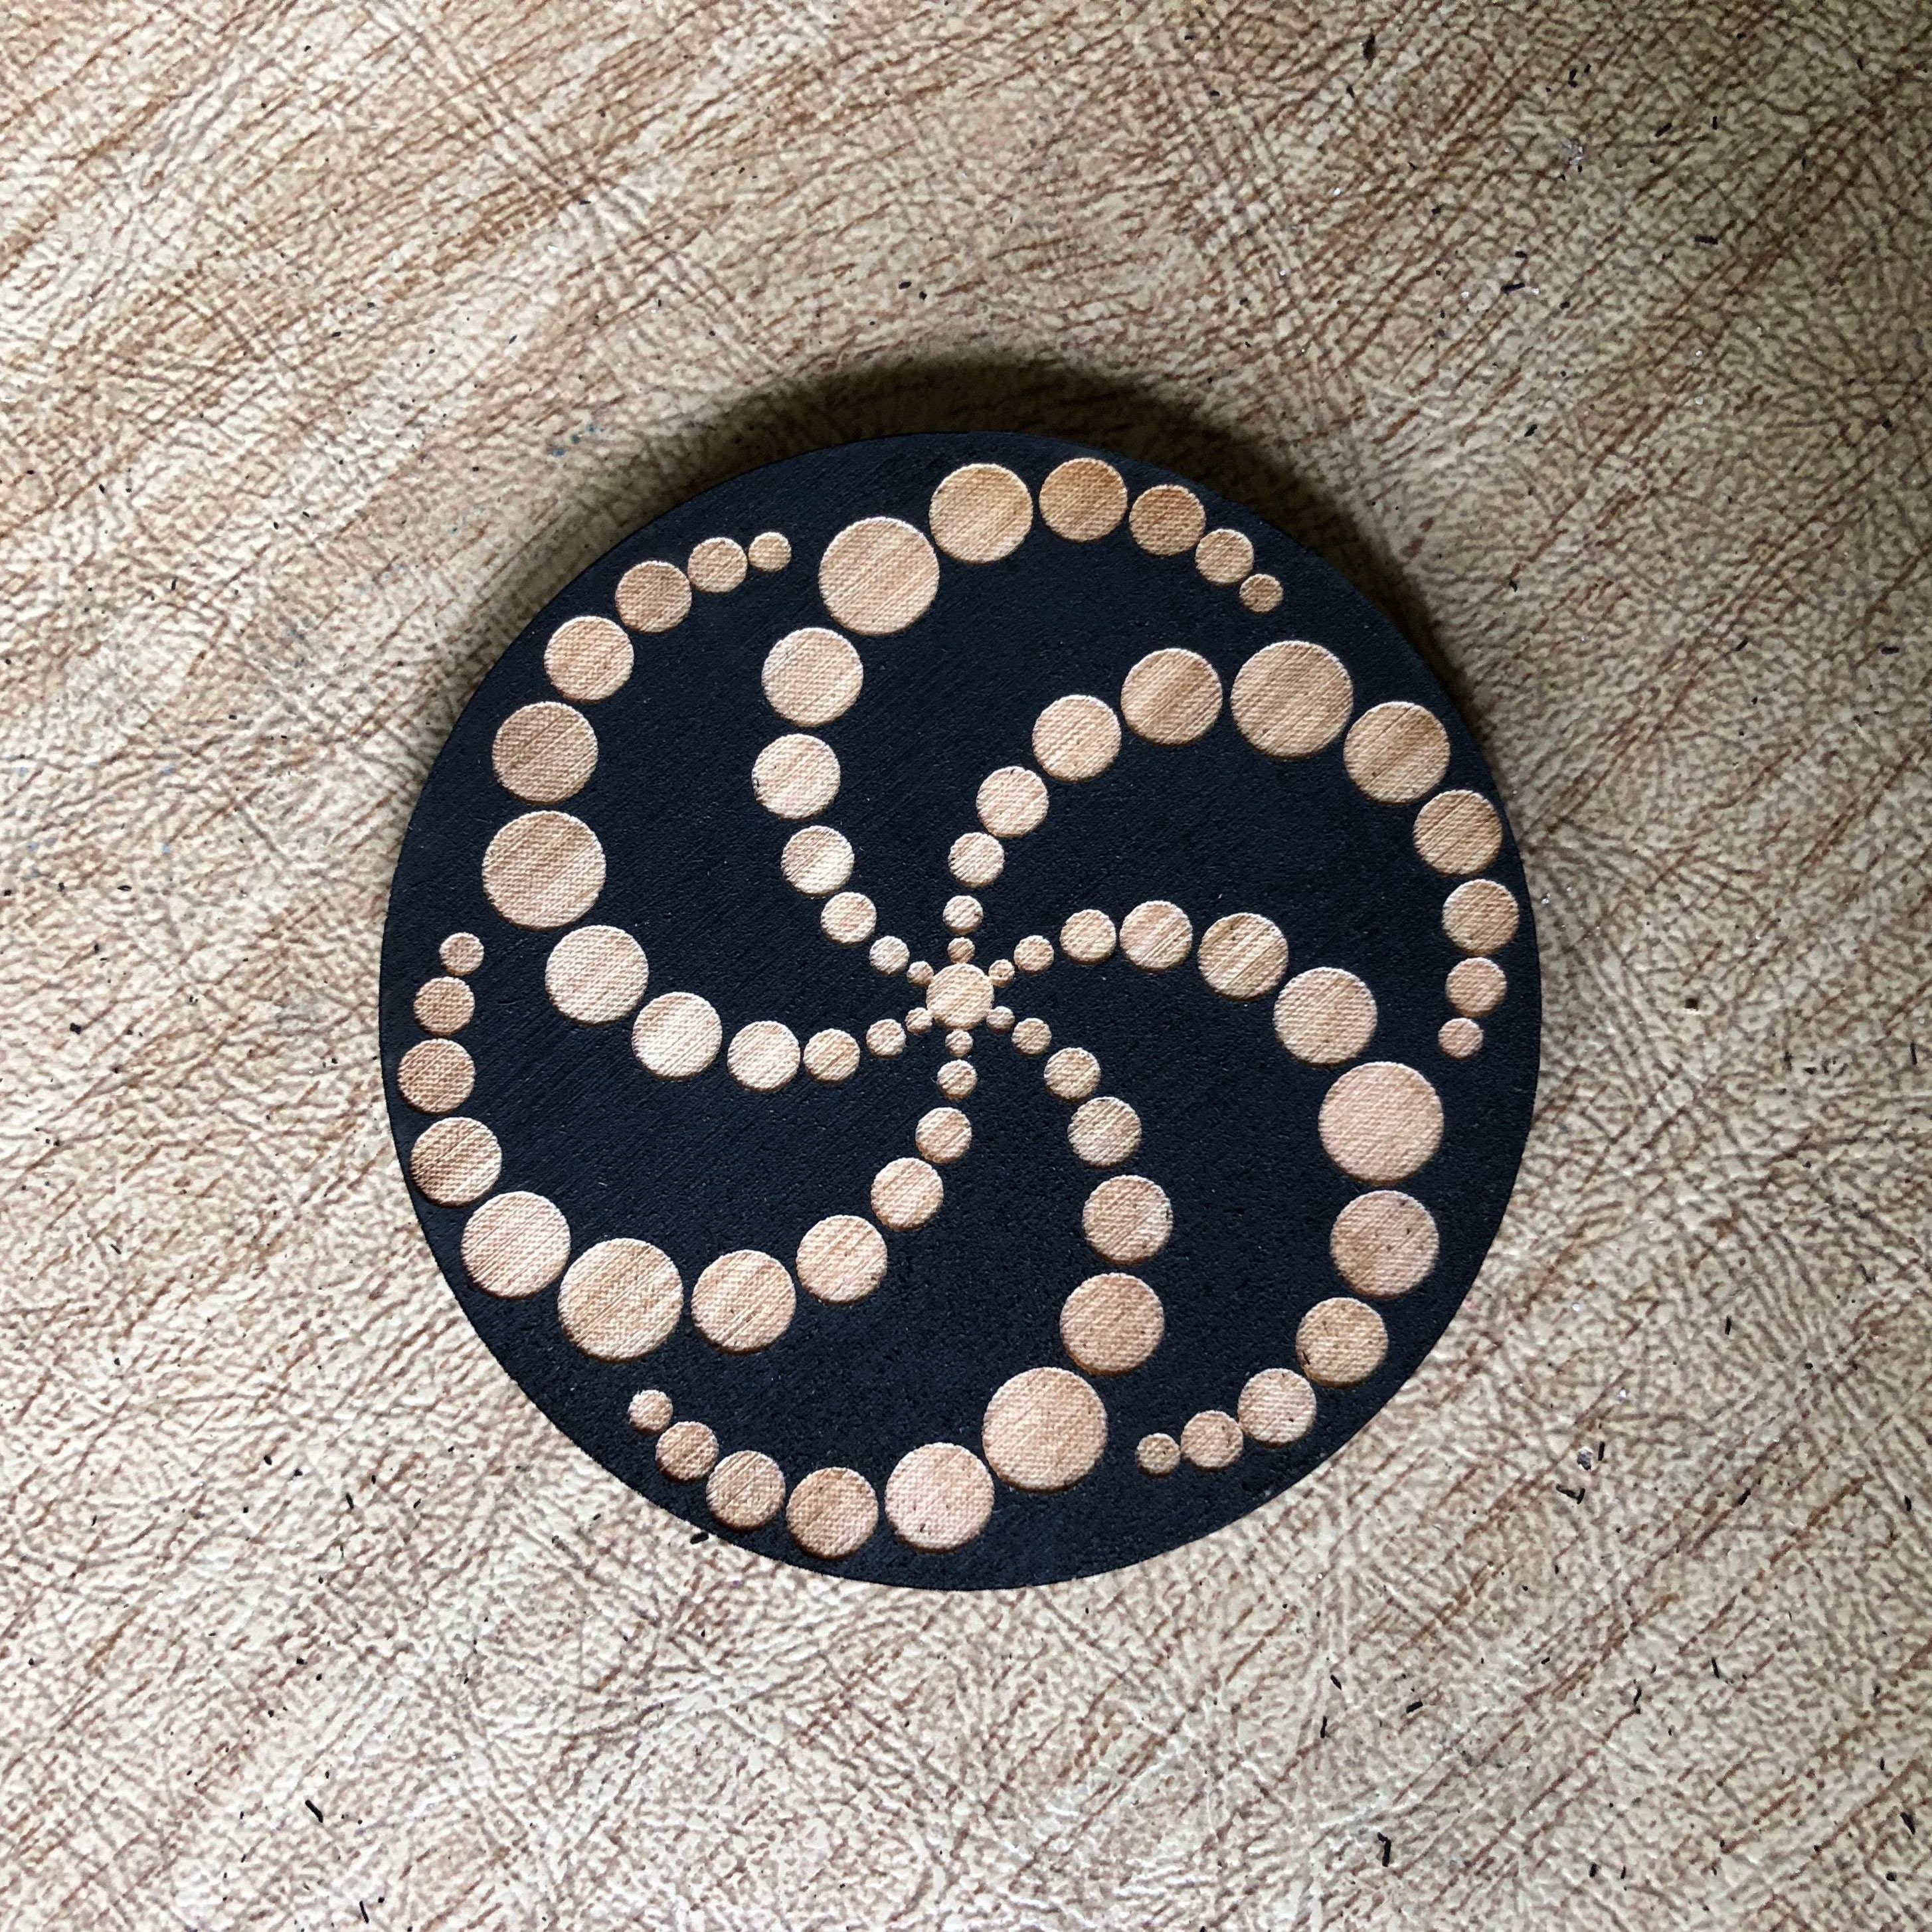 Painted Crop Circle Magnet